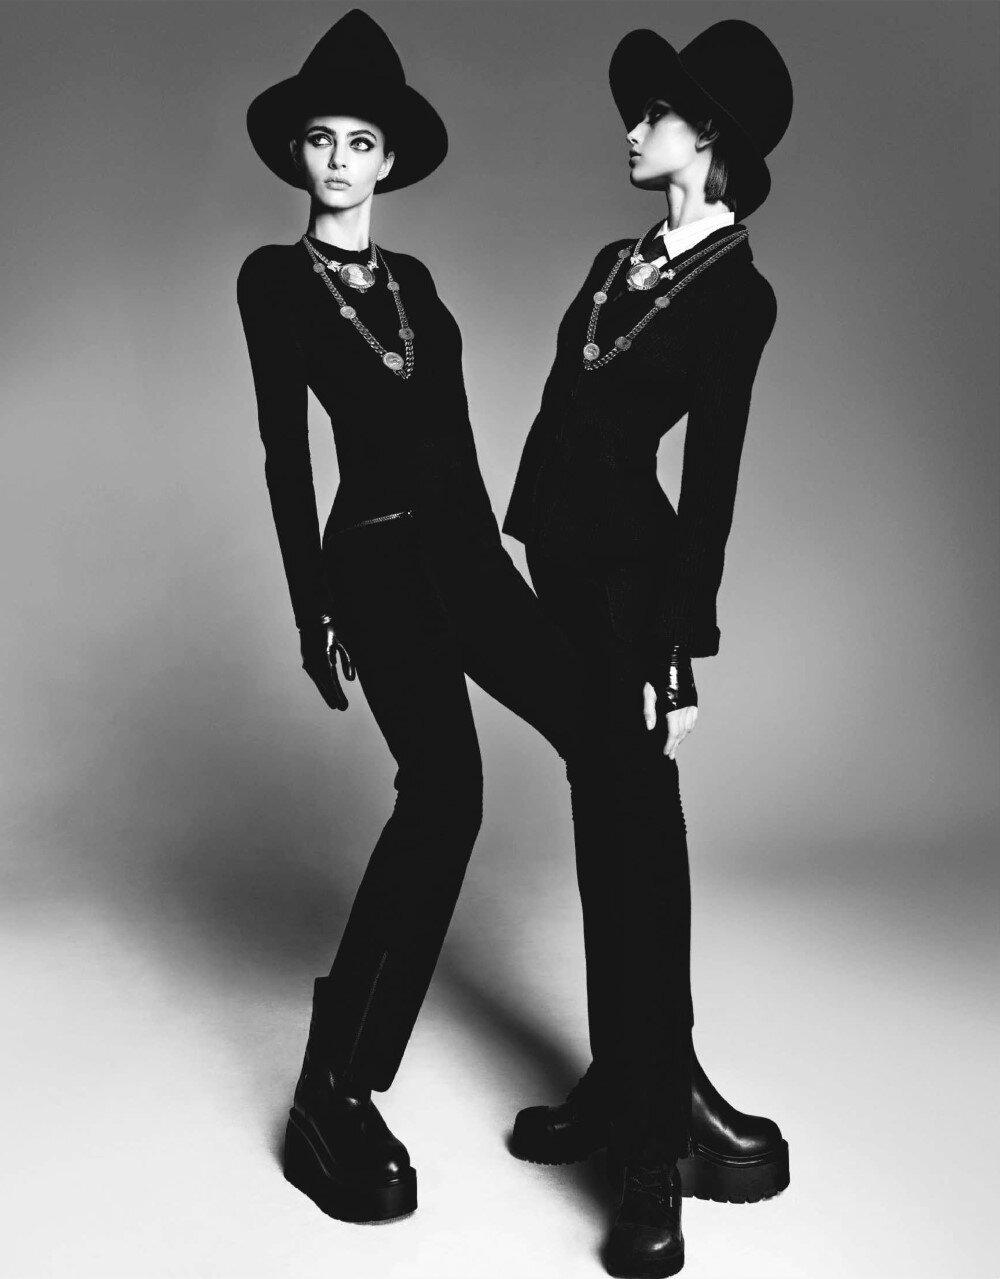 Luigi Iango Vogue Japan Aug 2020 Fashion Story (1).jpg